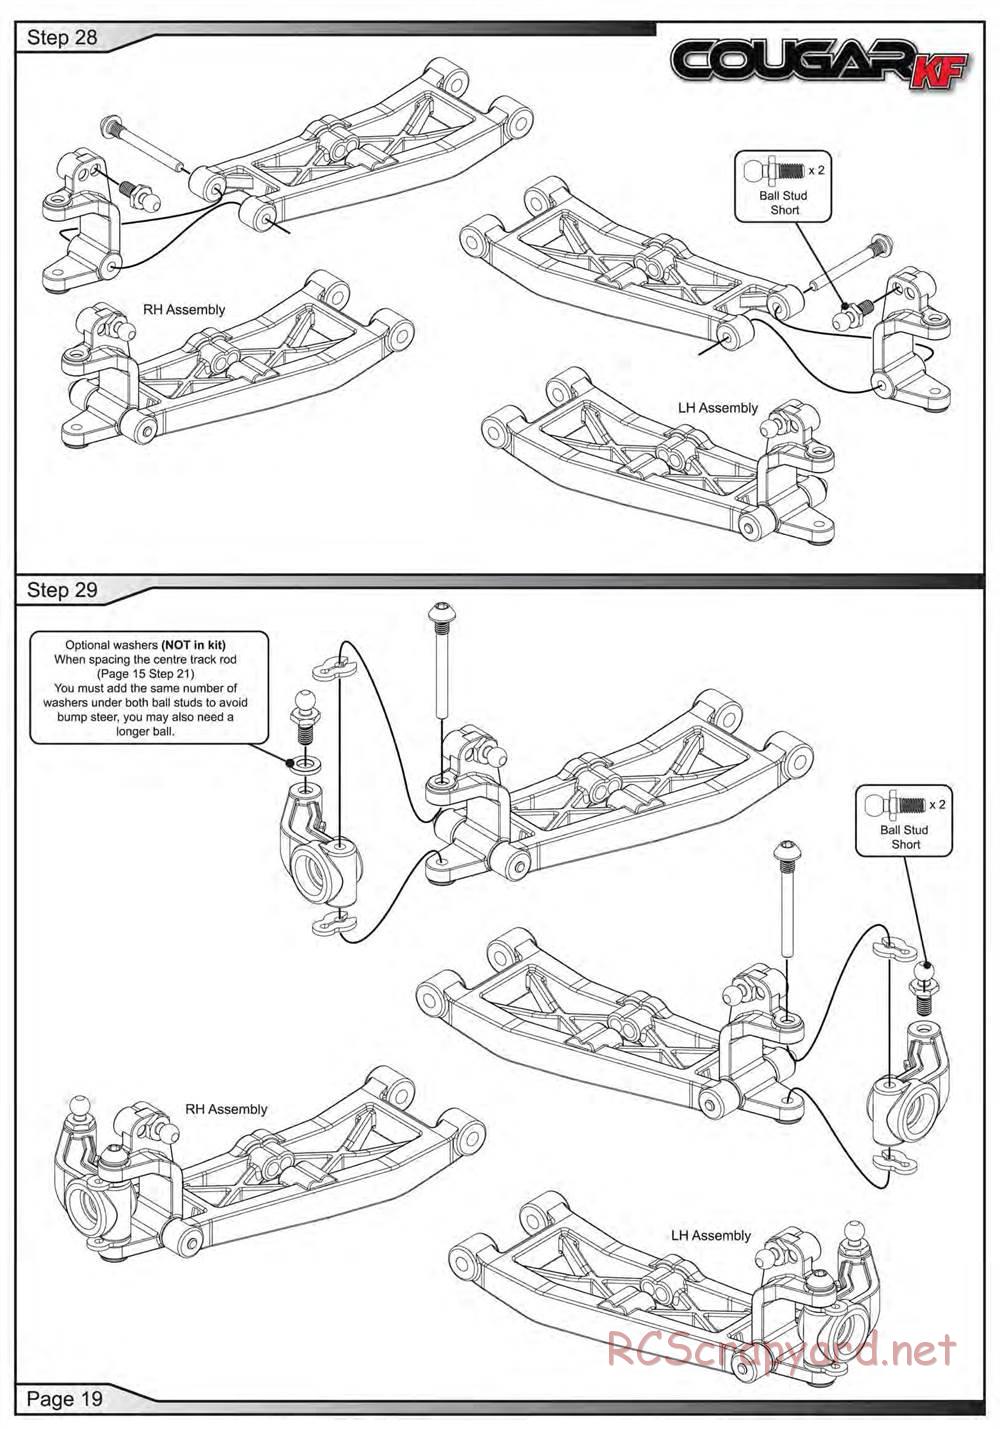 Schumacher - Cougar KF - Manual - Page 20